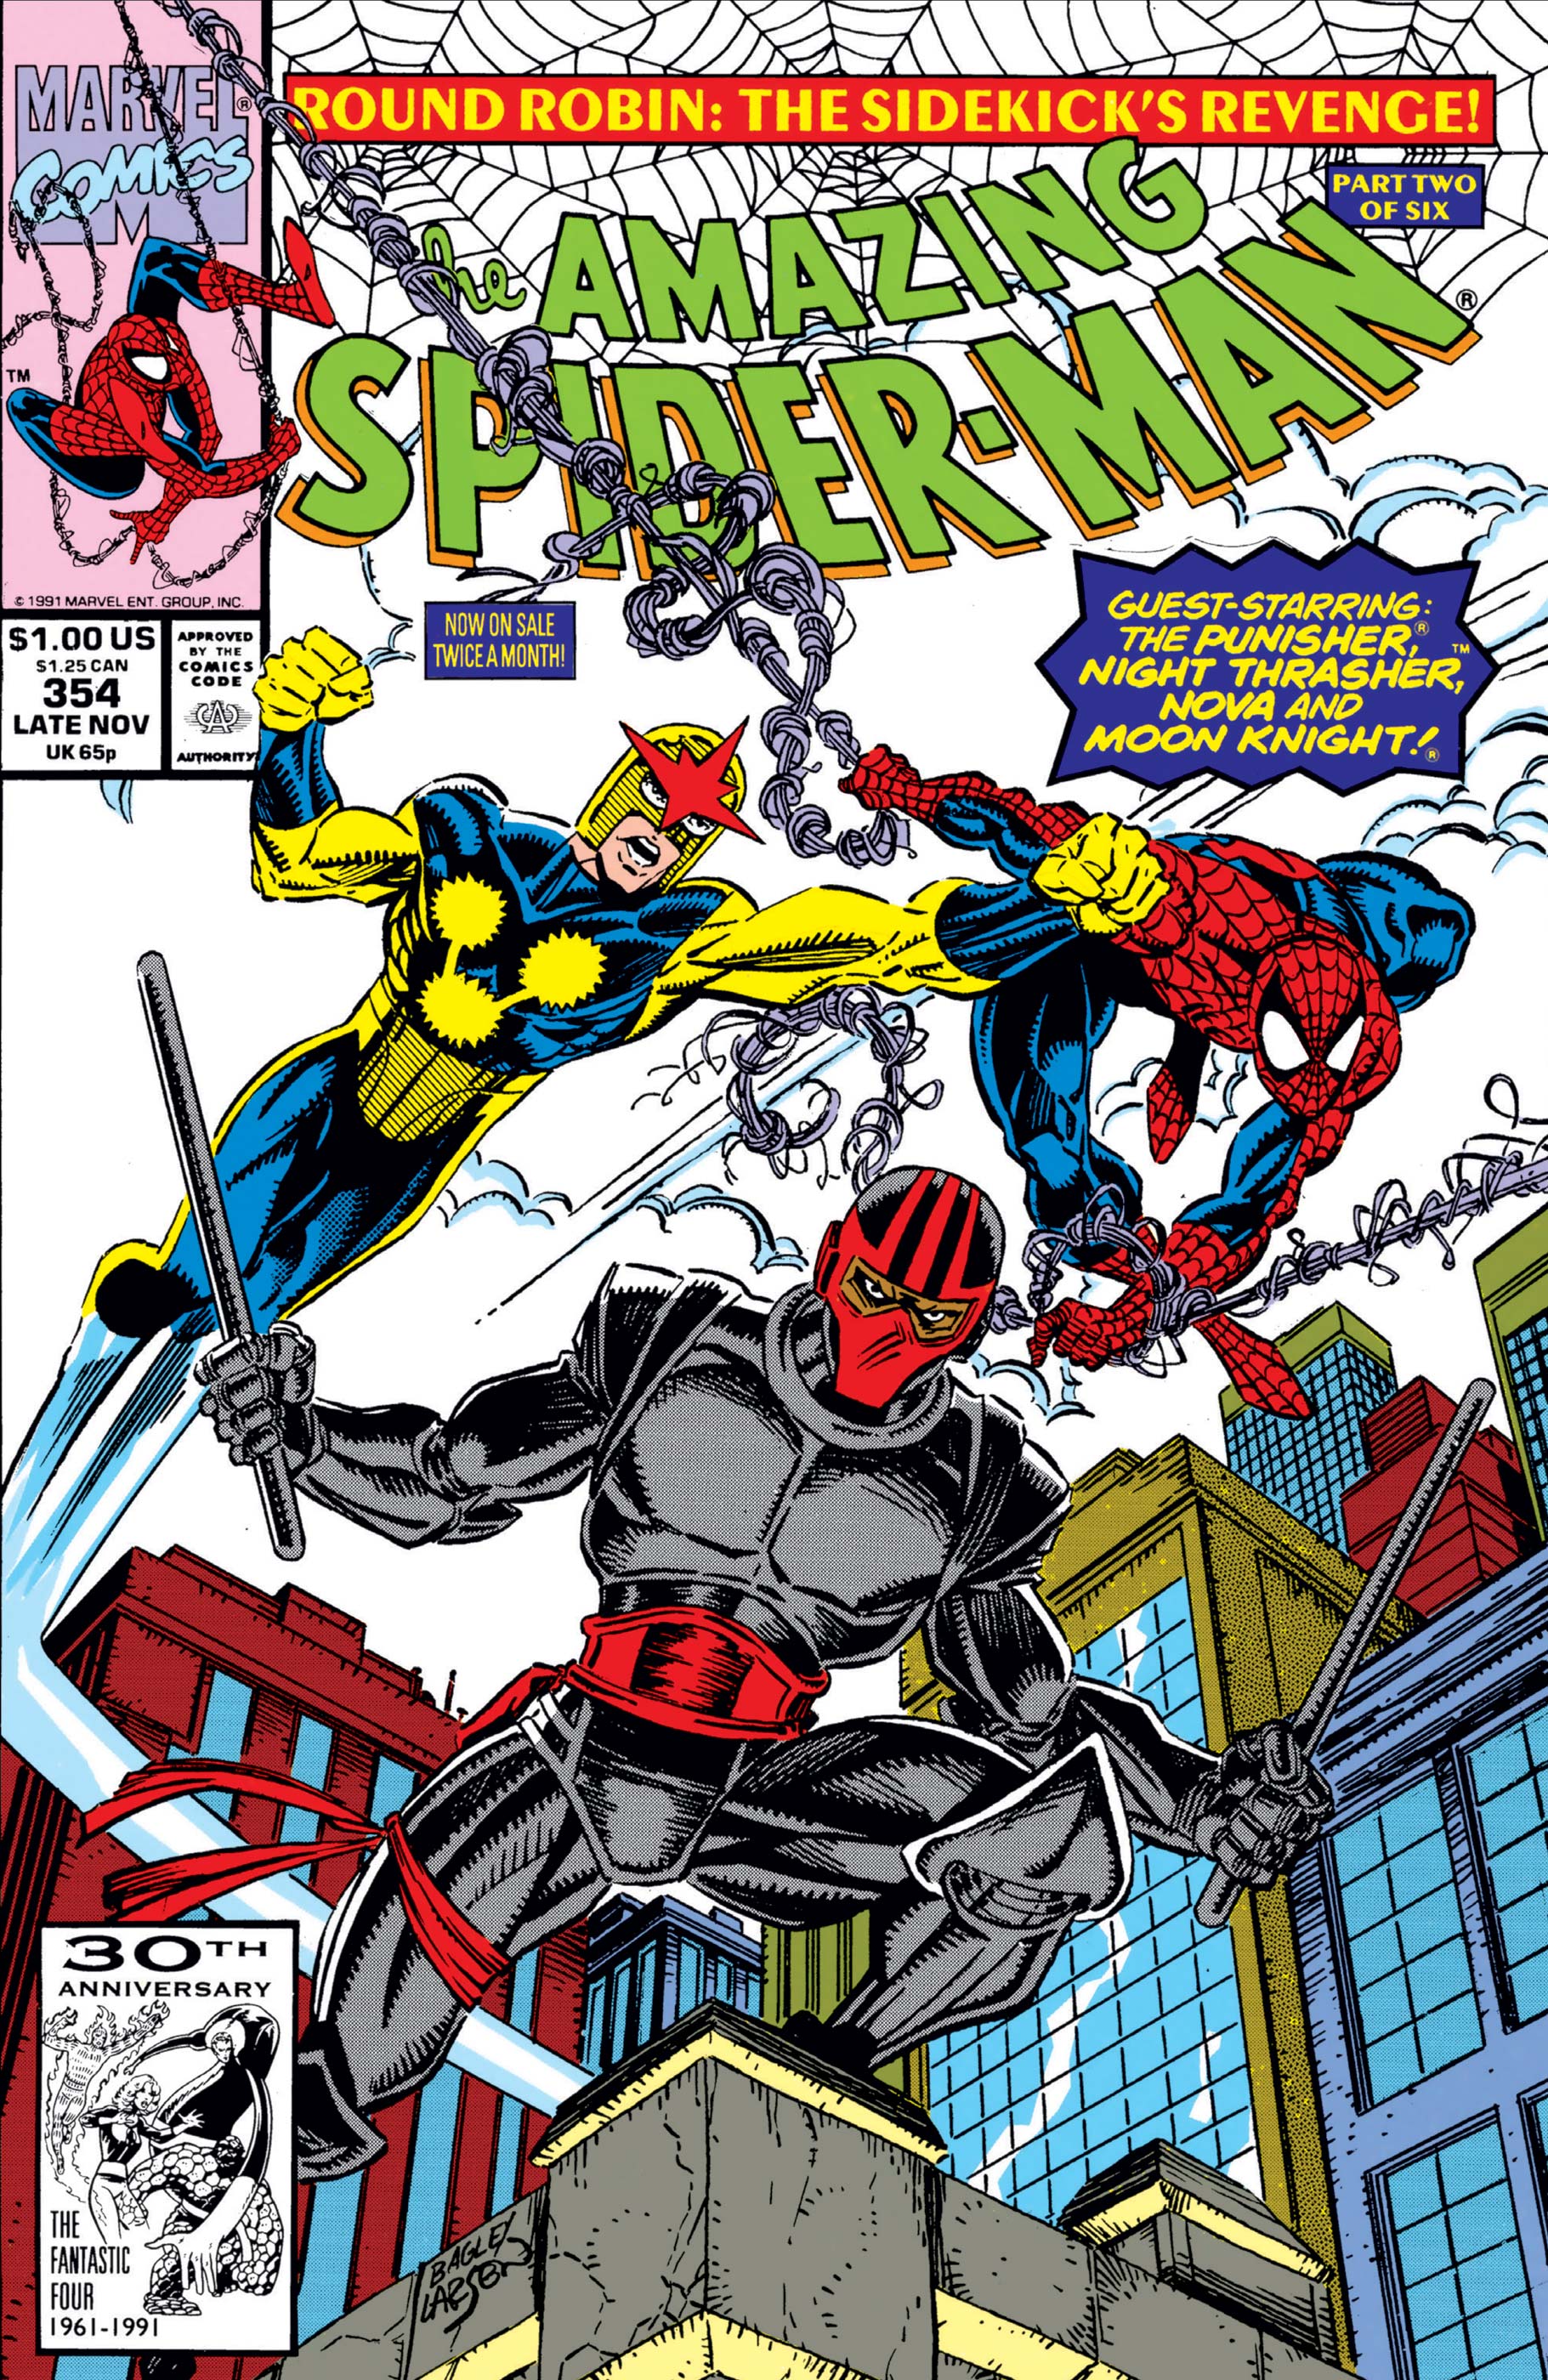 The Amazing Spider-Man (1963) #354